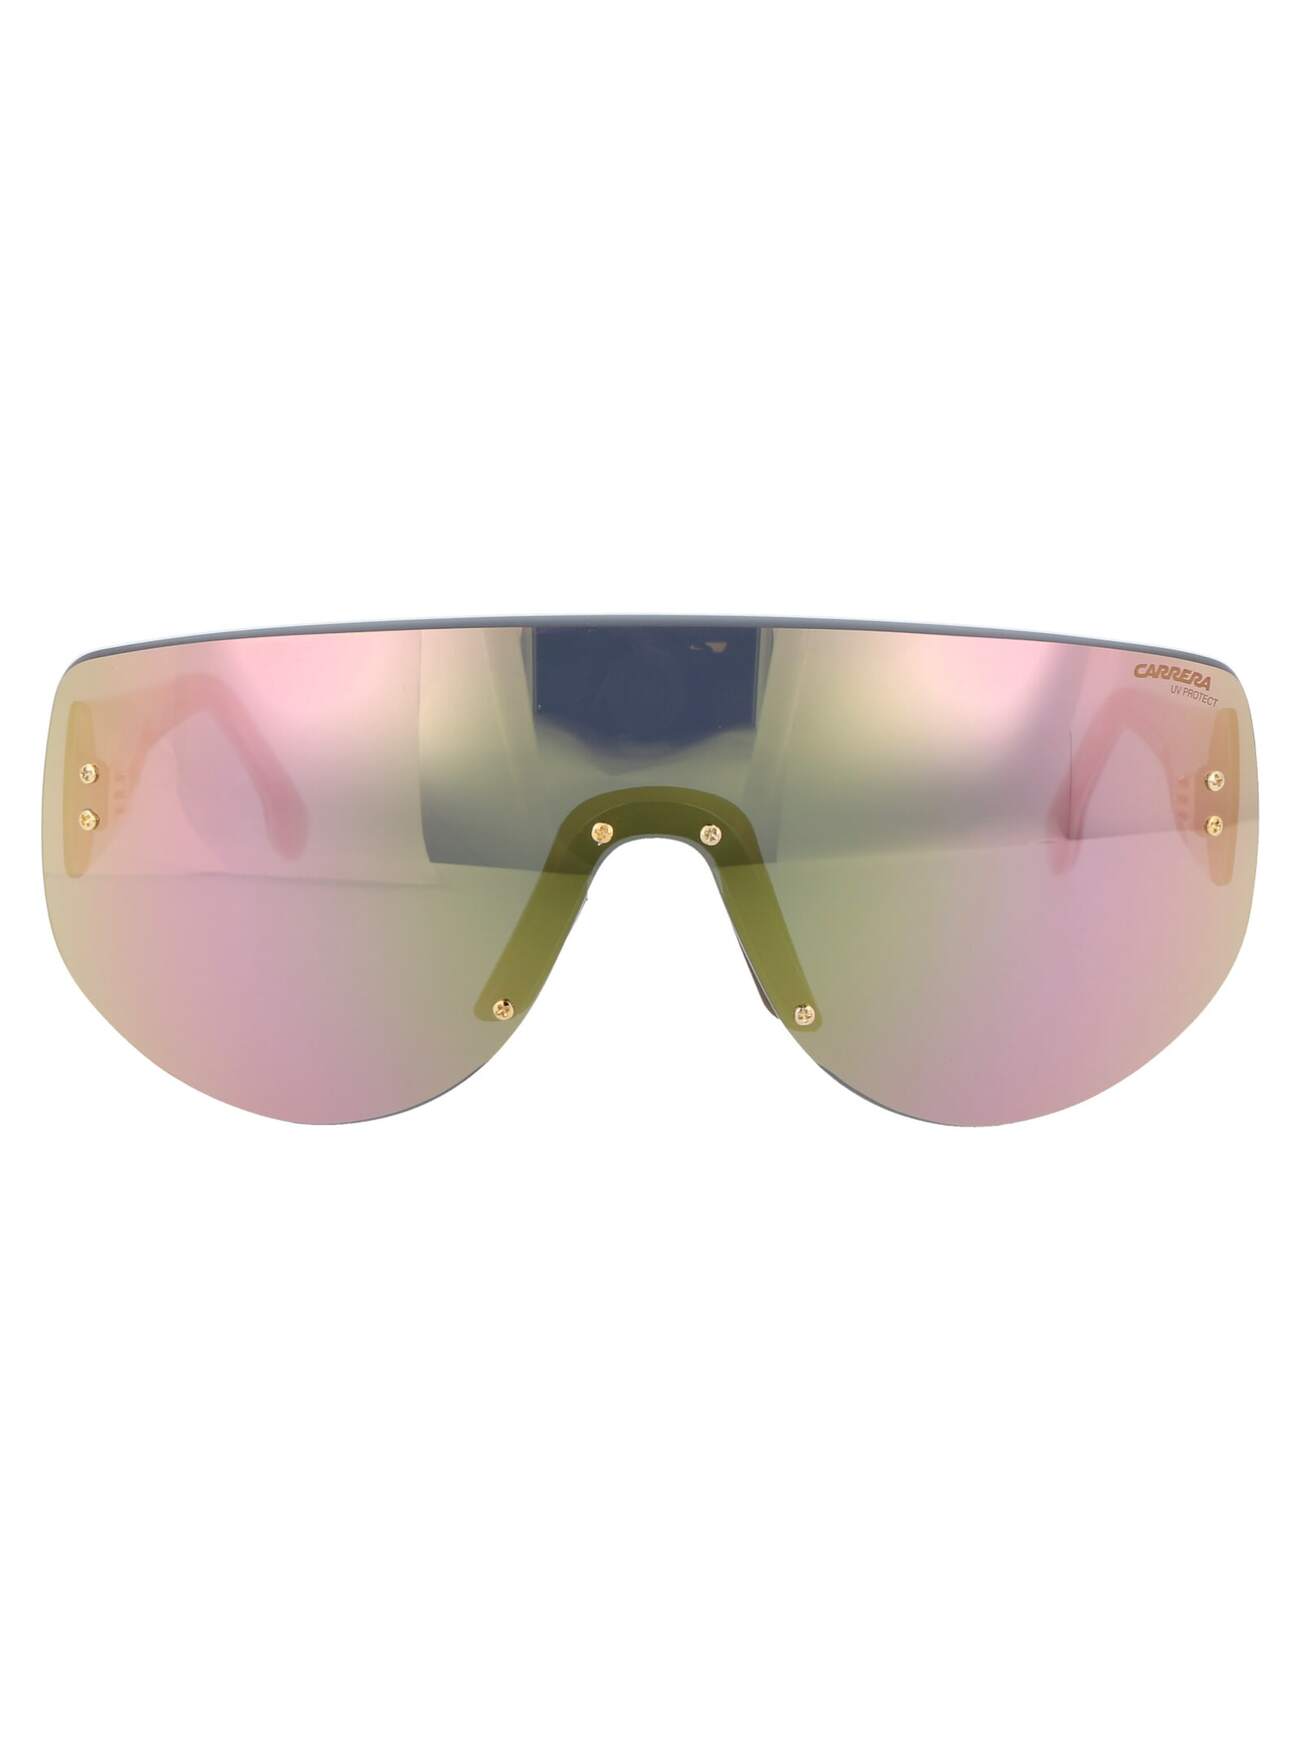 Carrera Flaglab 12 Sunglasses in gold / rose